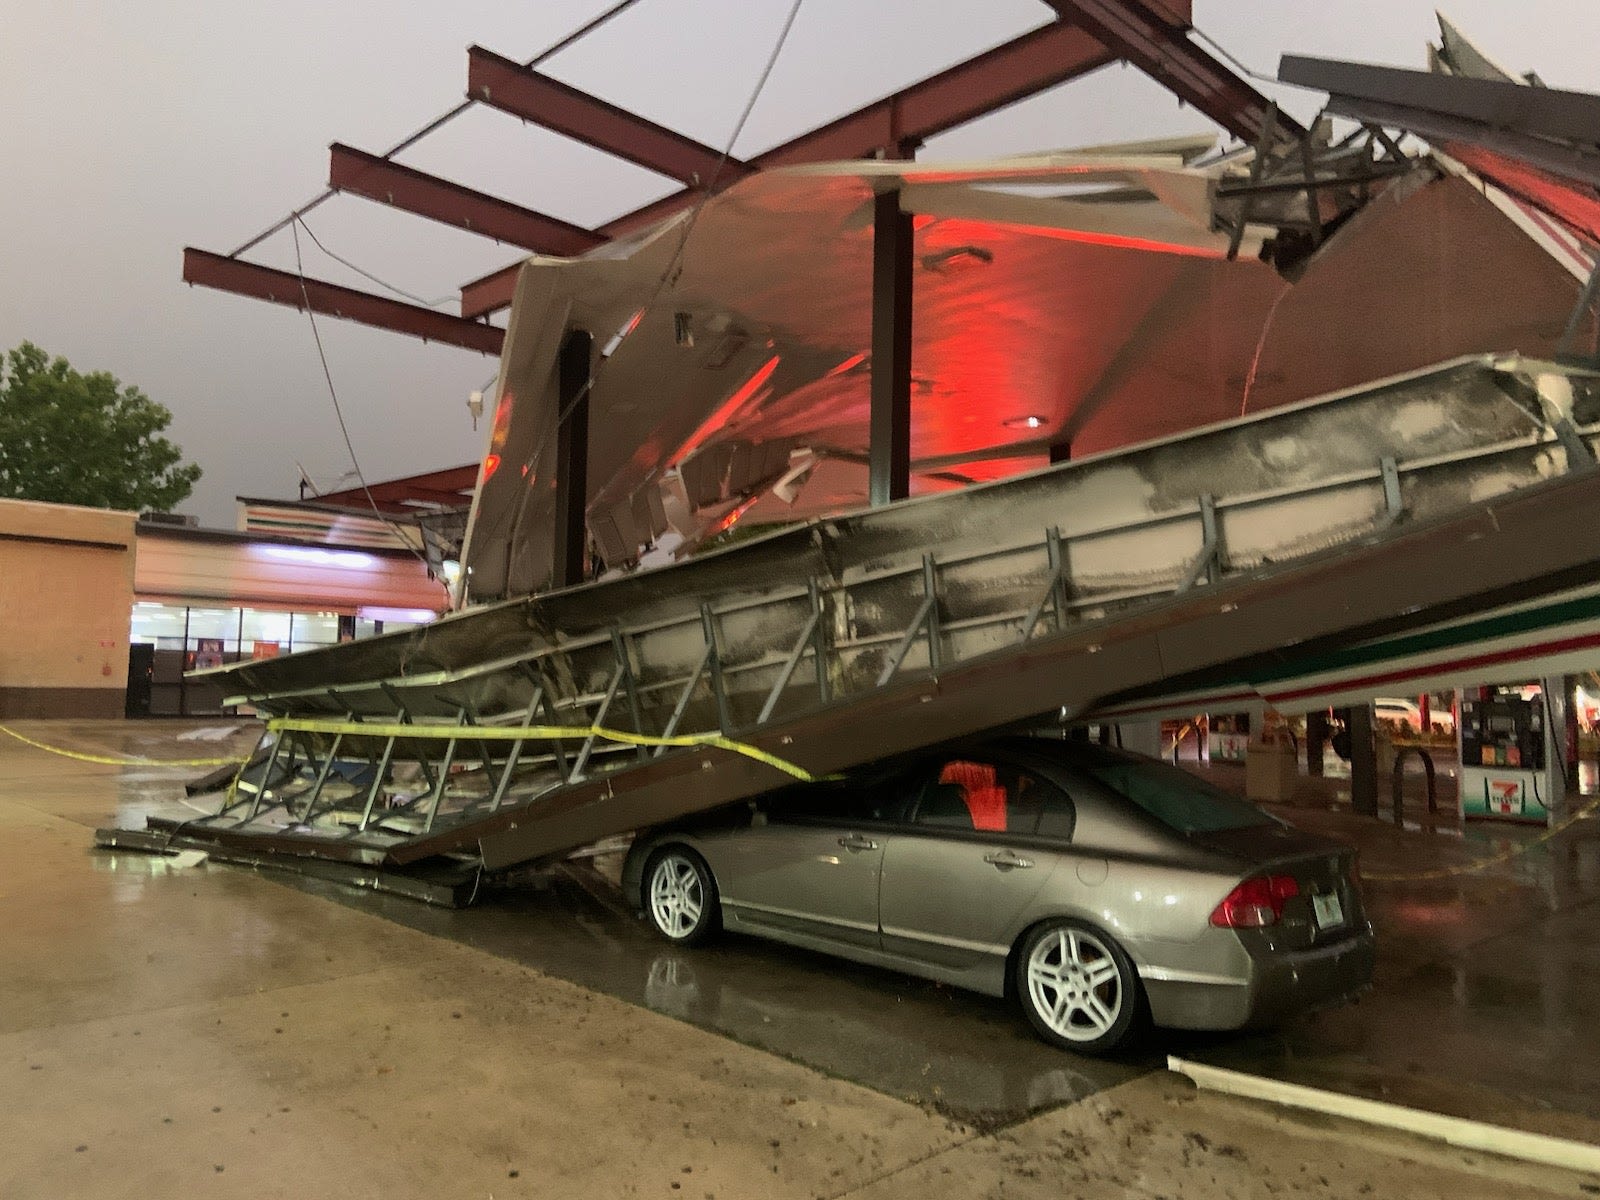 Florida thunderstorm knocks gas station canopy onto car near Orlando